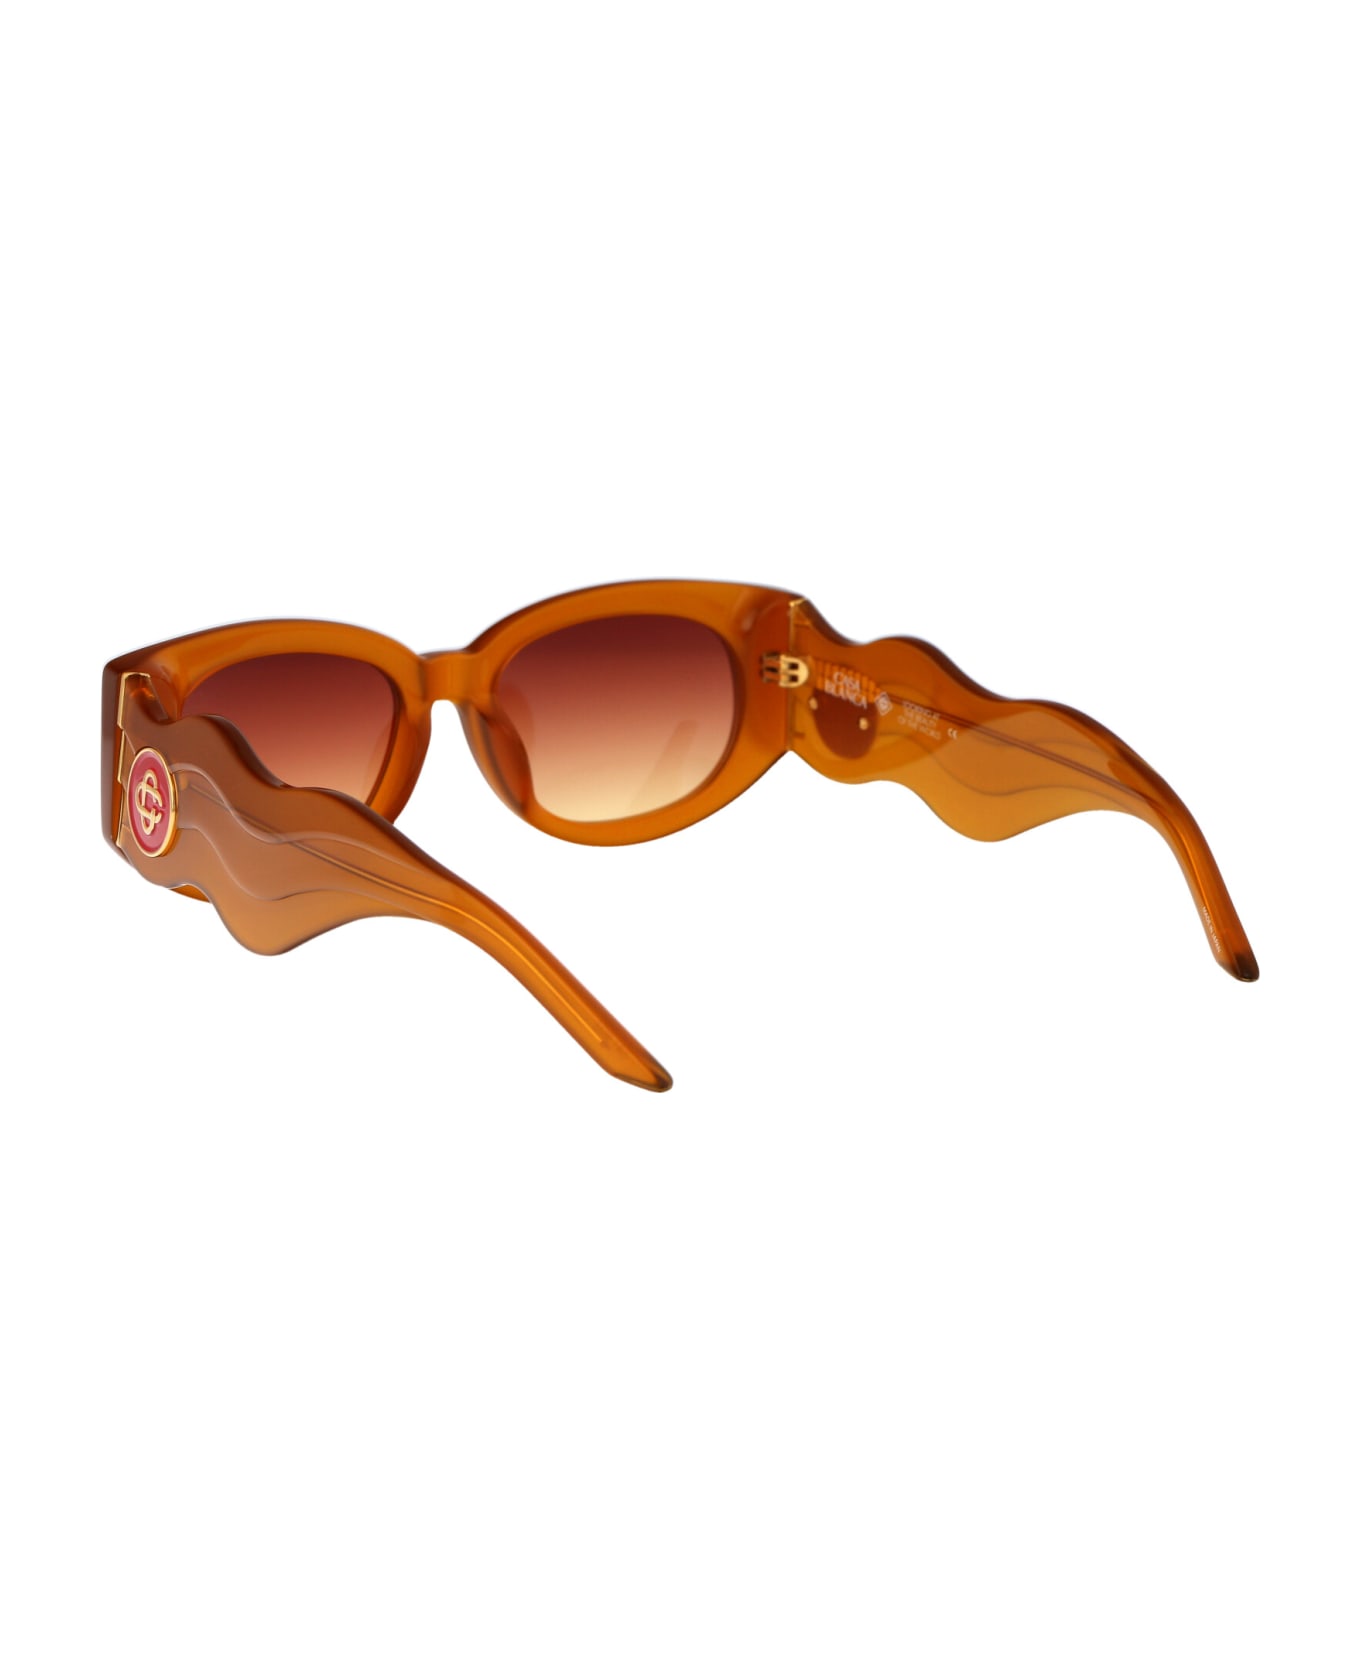 Casablanca As23-ew-020-02w Sunglasses - ORANGE/YELLOW GOLD/SUNSET GRAD